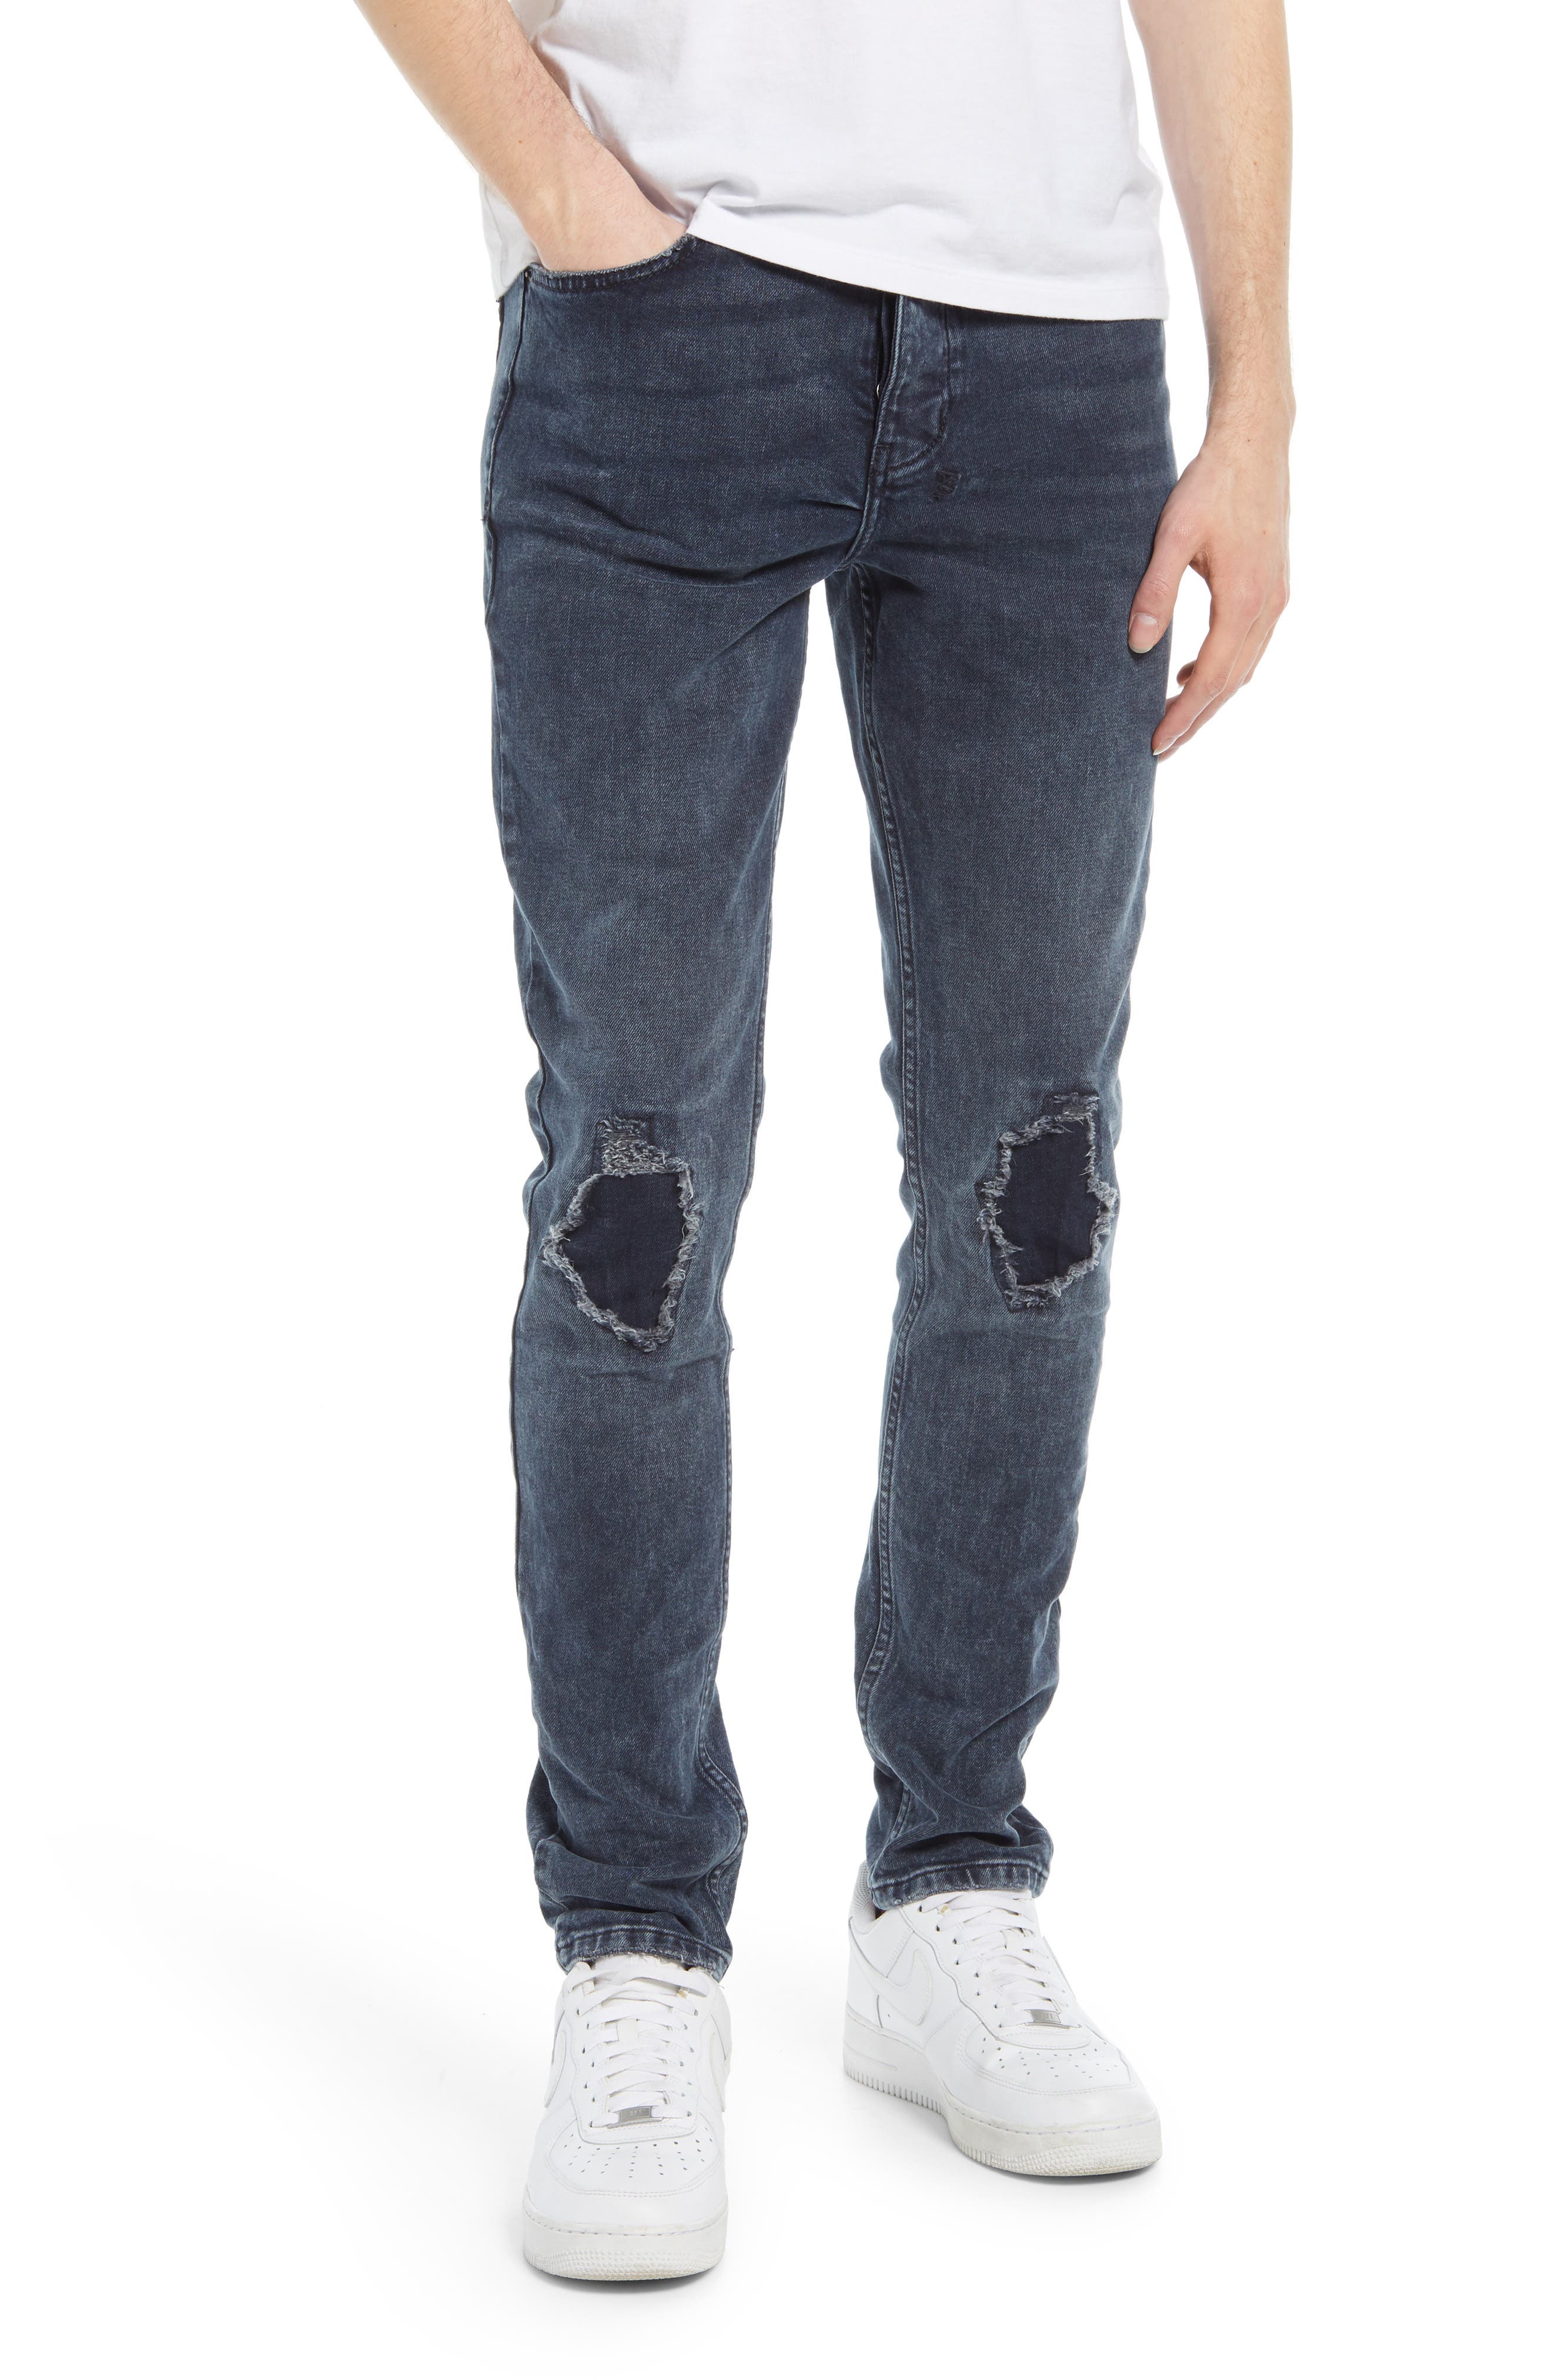 Ksubi Chitch Blue Kolla Slashed Stretch Skinny Jeans in Denim at Nordstrom, Size 31